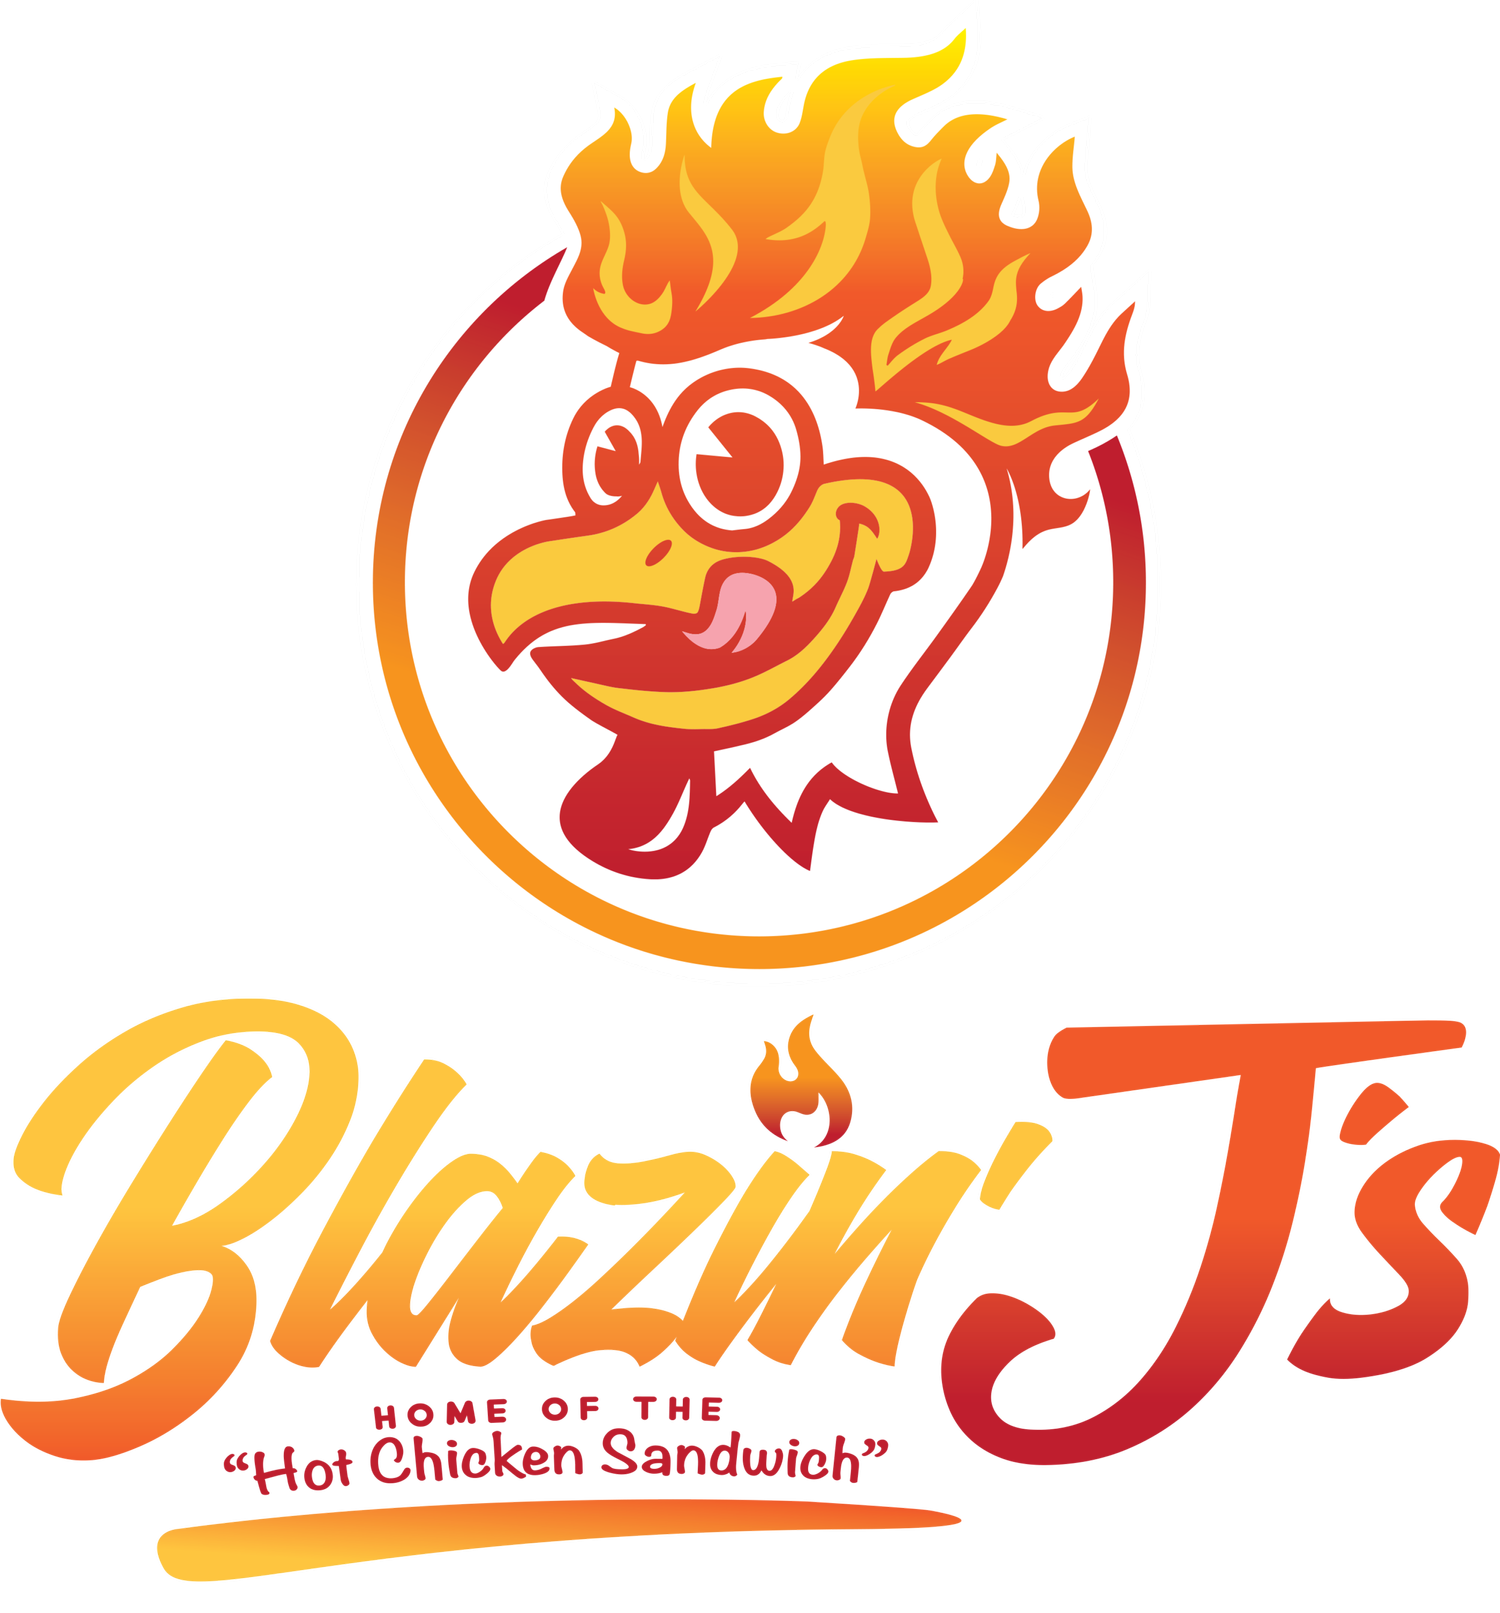 Blazin' J's founder expands spicy chicken kingdom to fifth